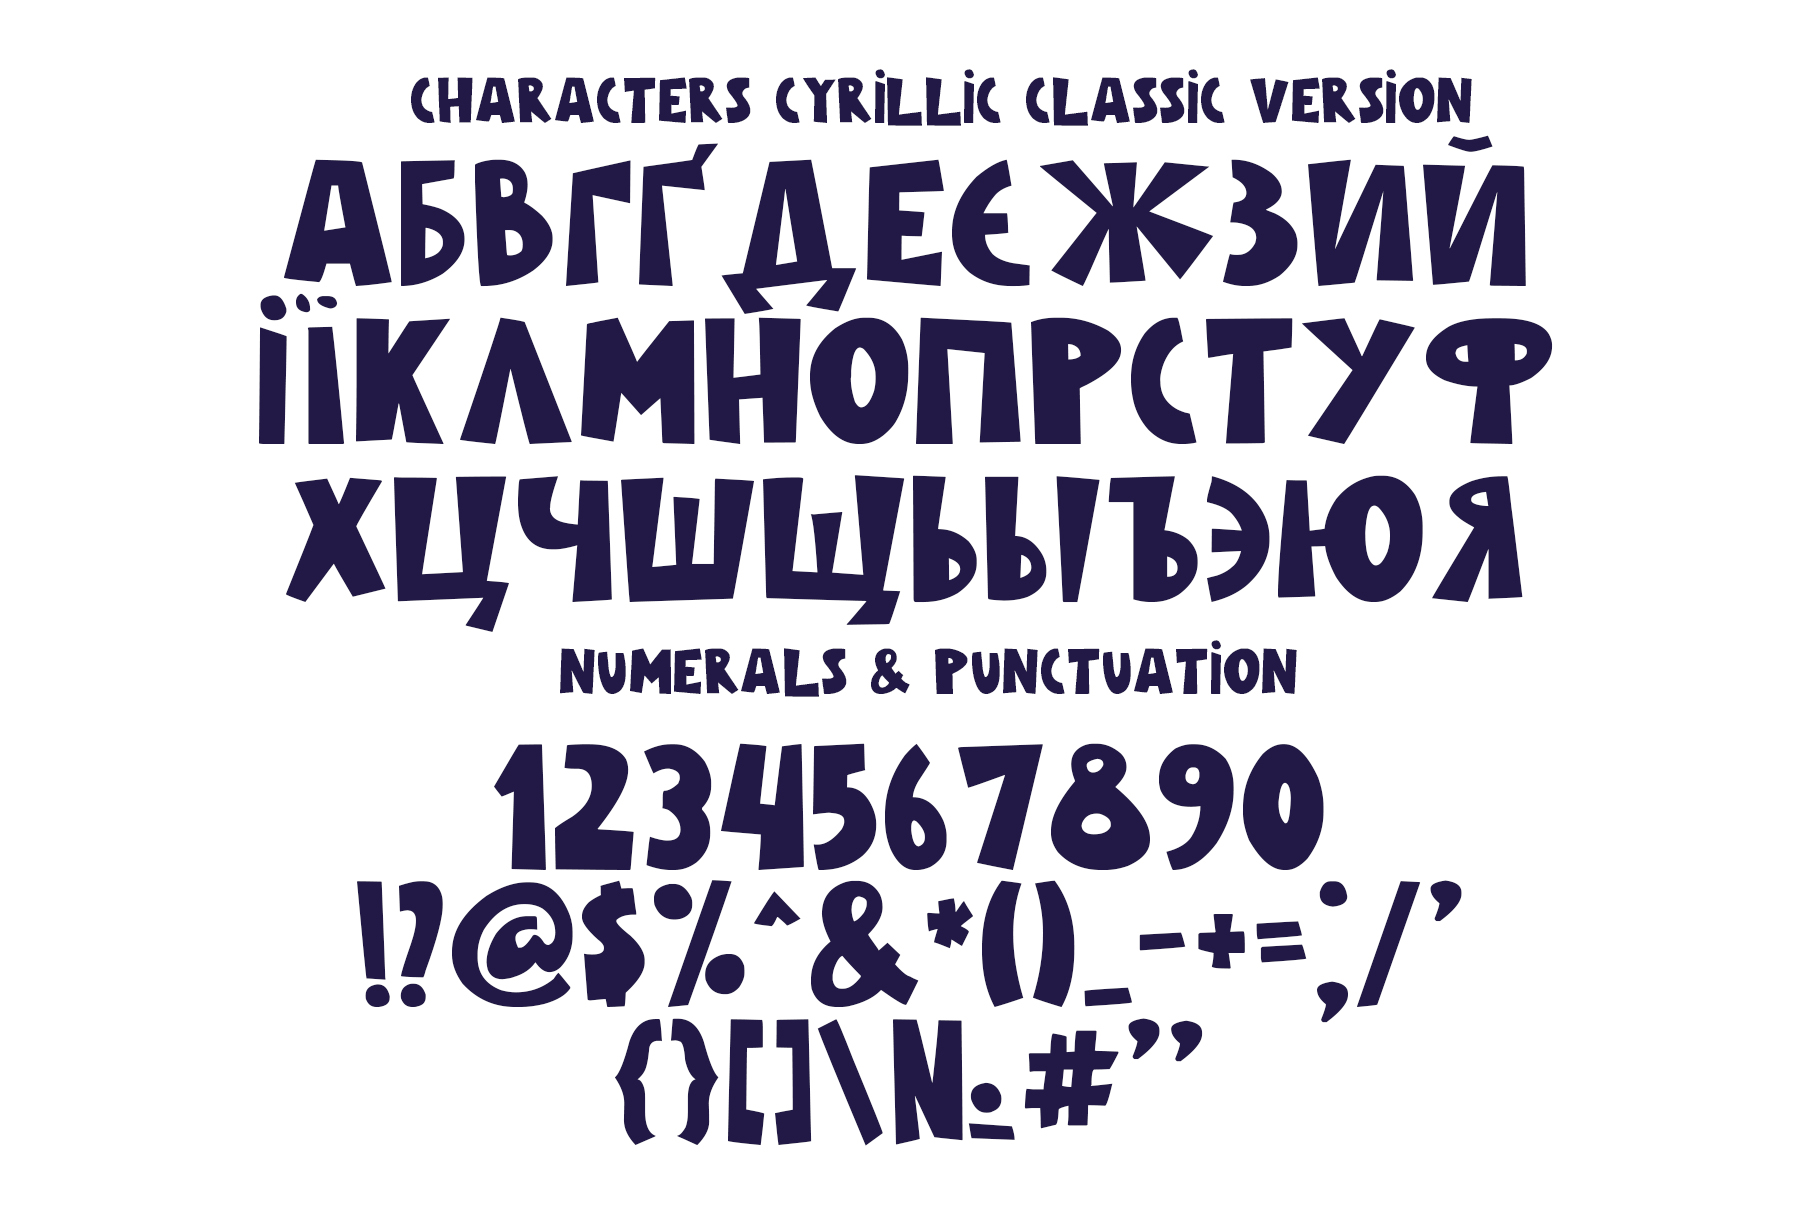 Cyrillic classic version - numerals & punctuation.